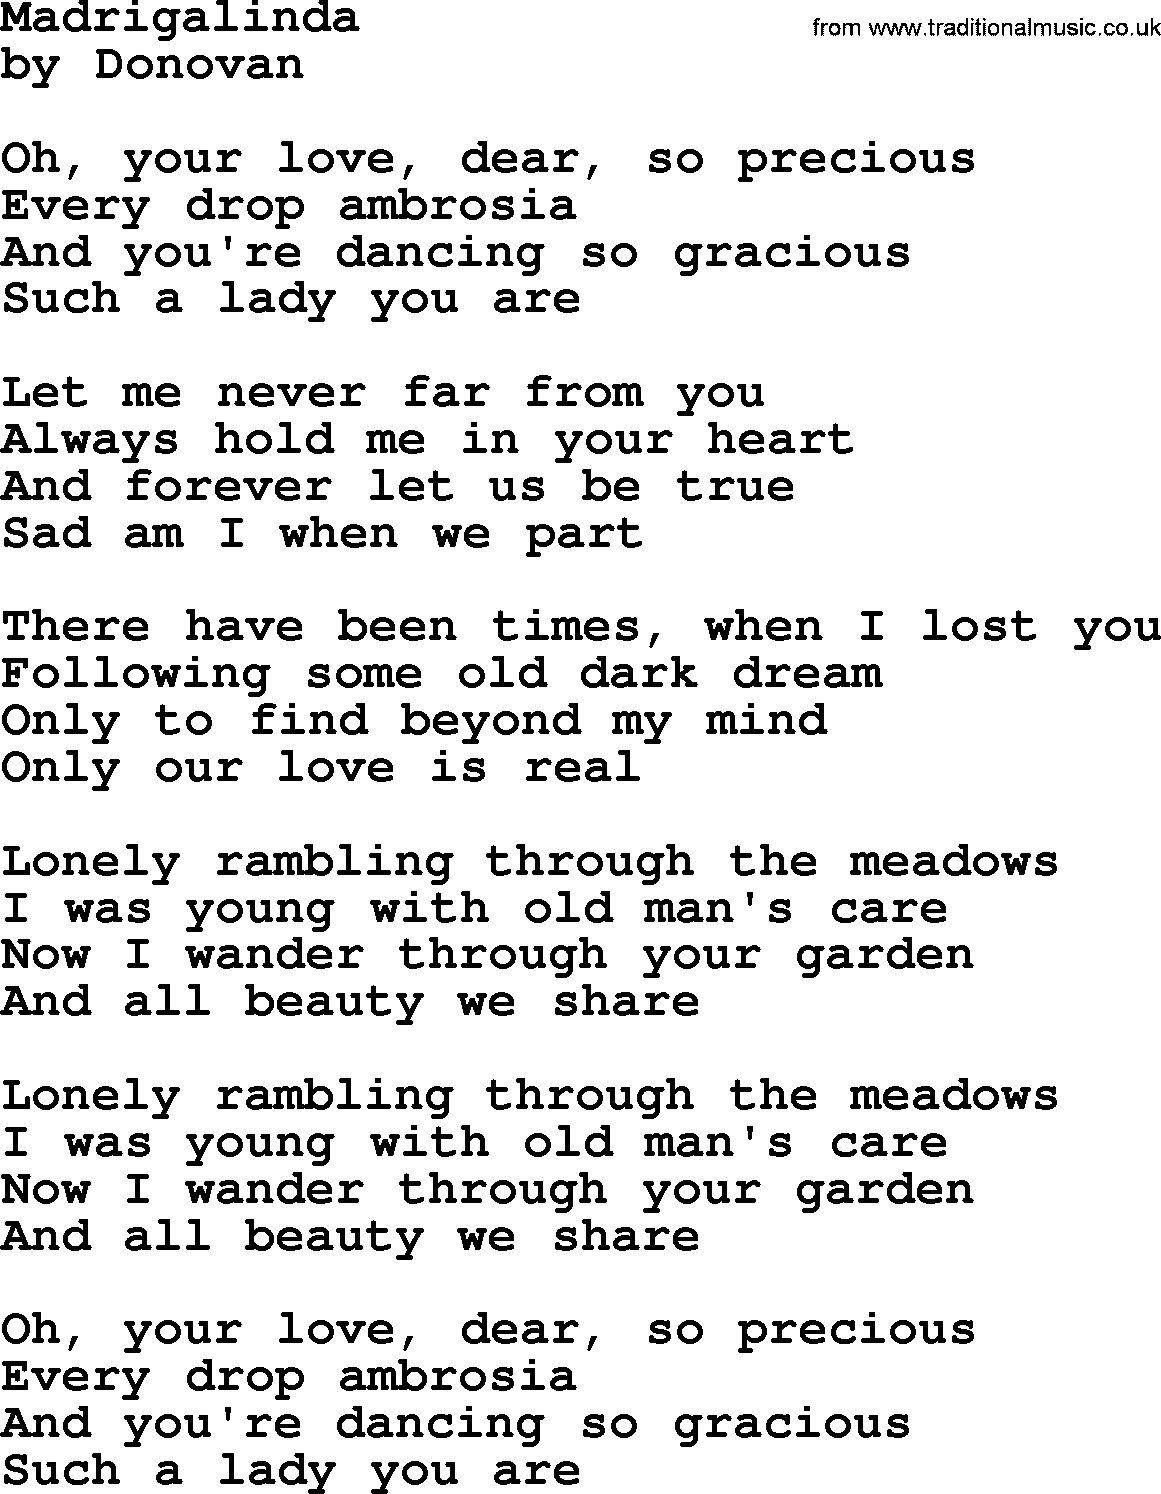 Donovan Leitch song: Madrigalinda lyrics